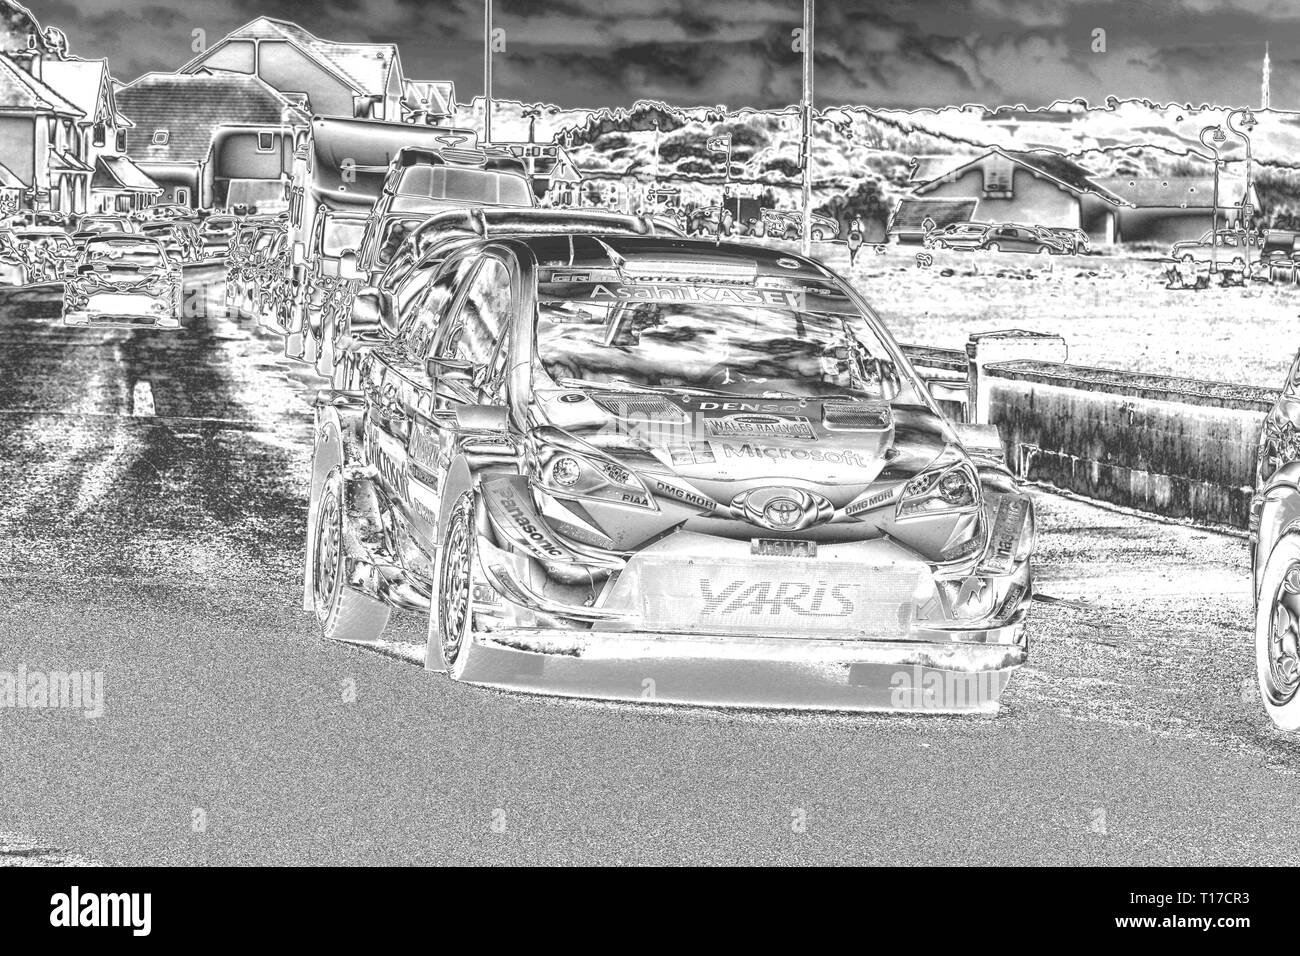 Cambrian Rally Llandudno, The chrome effect give an image a metallic look Stock Photo